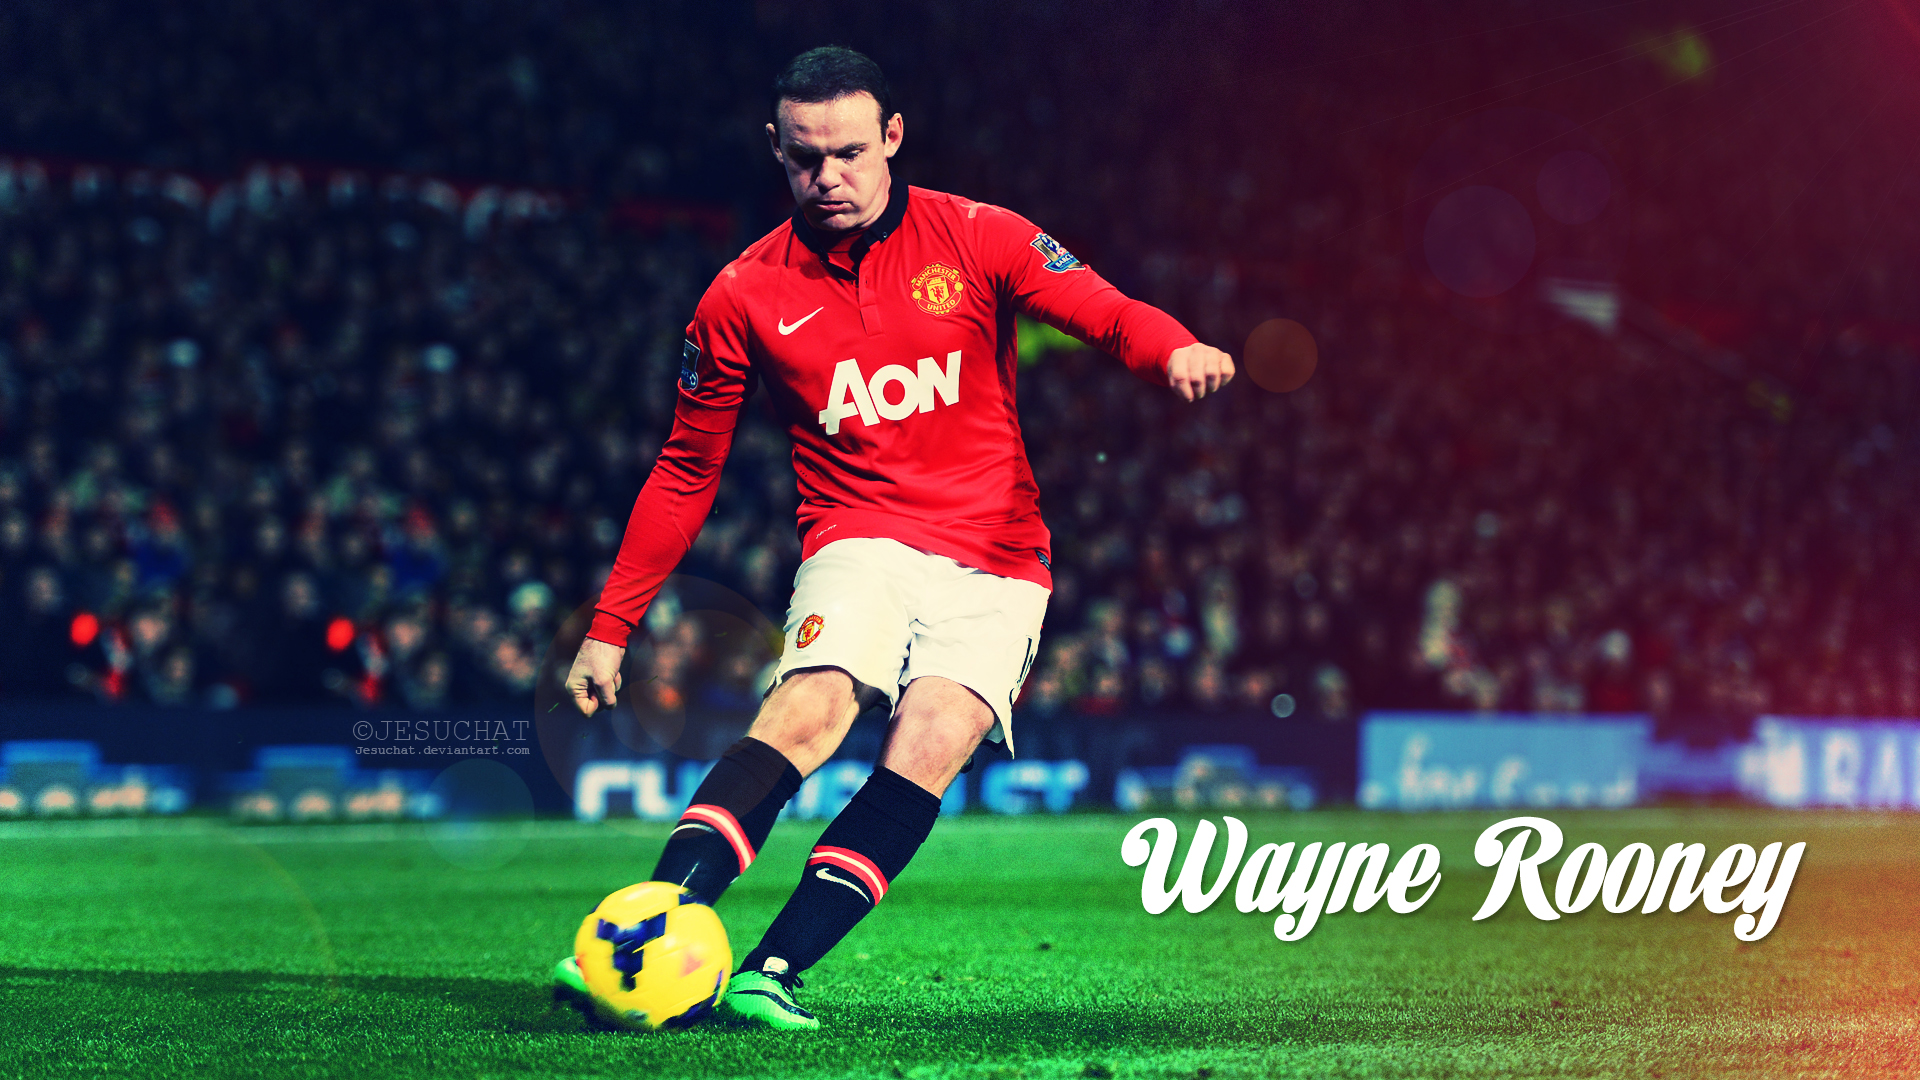 Wayne Rooney Wallpaper Full HD By Jesuchat